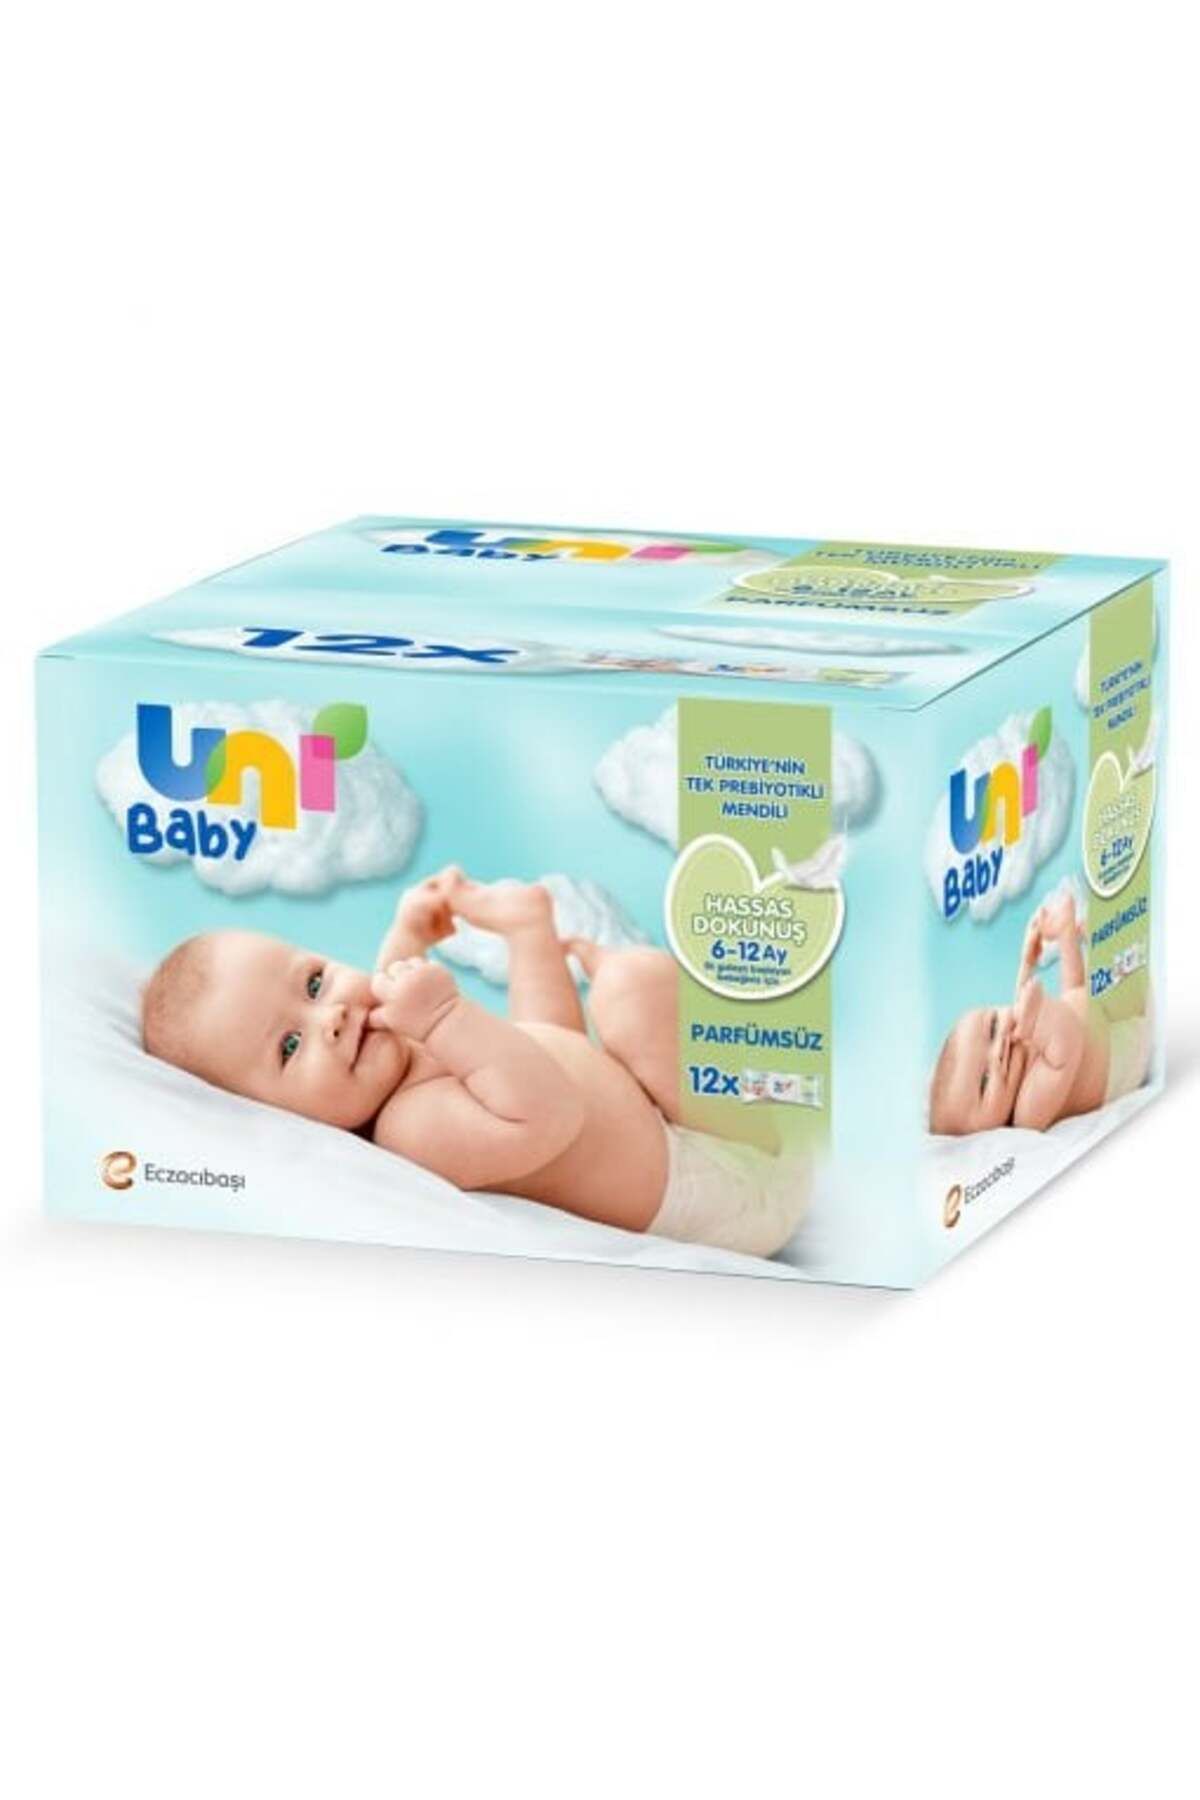 NessiWorld Uni Baby Hassas Dokunuş Islak Havlu Mendil 12li 624 Yaprak